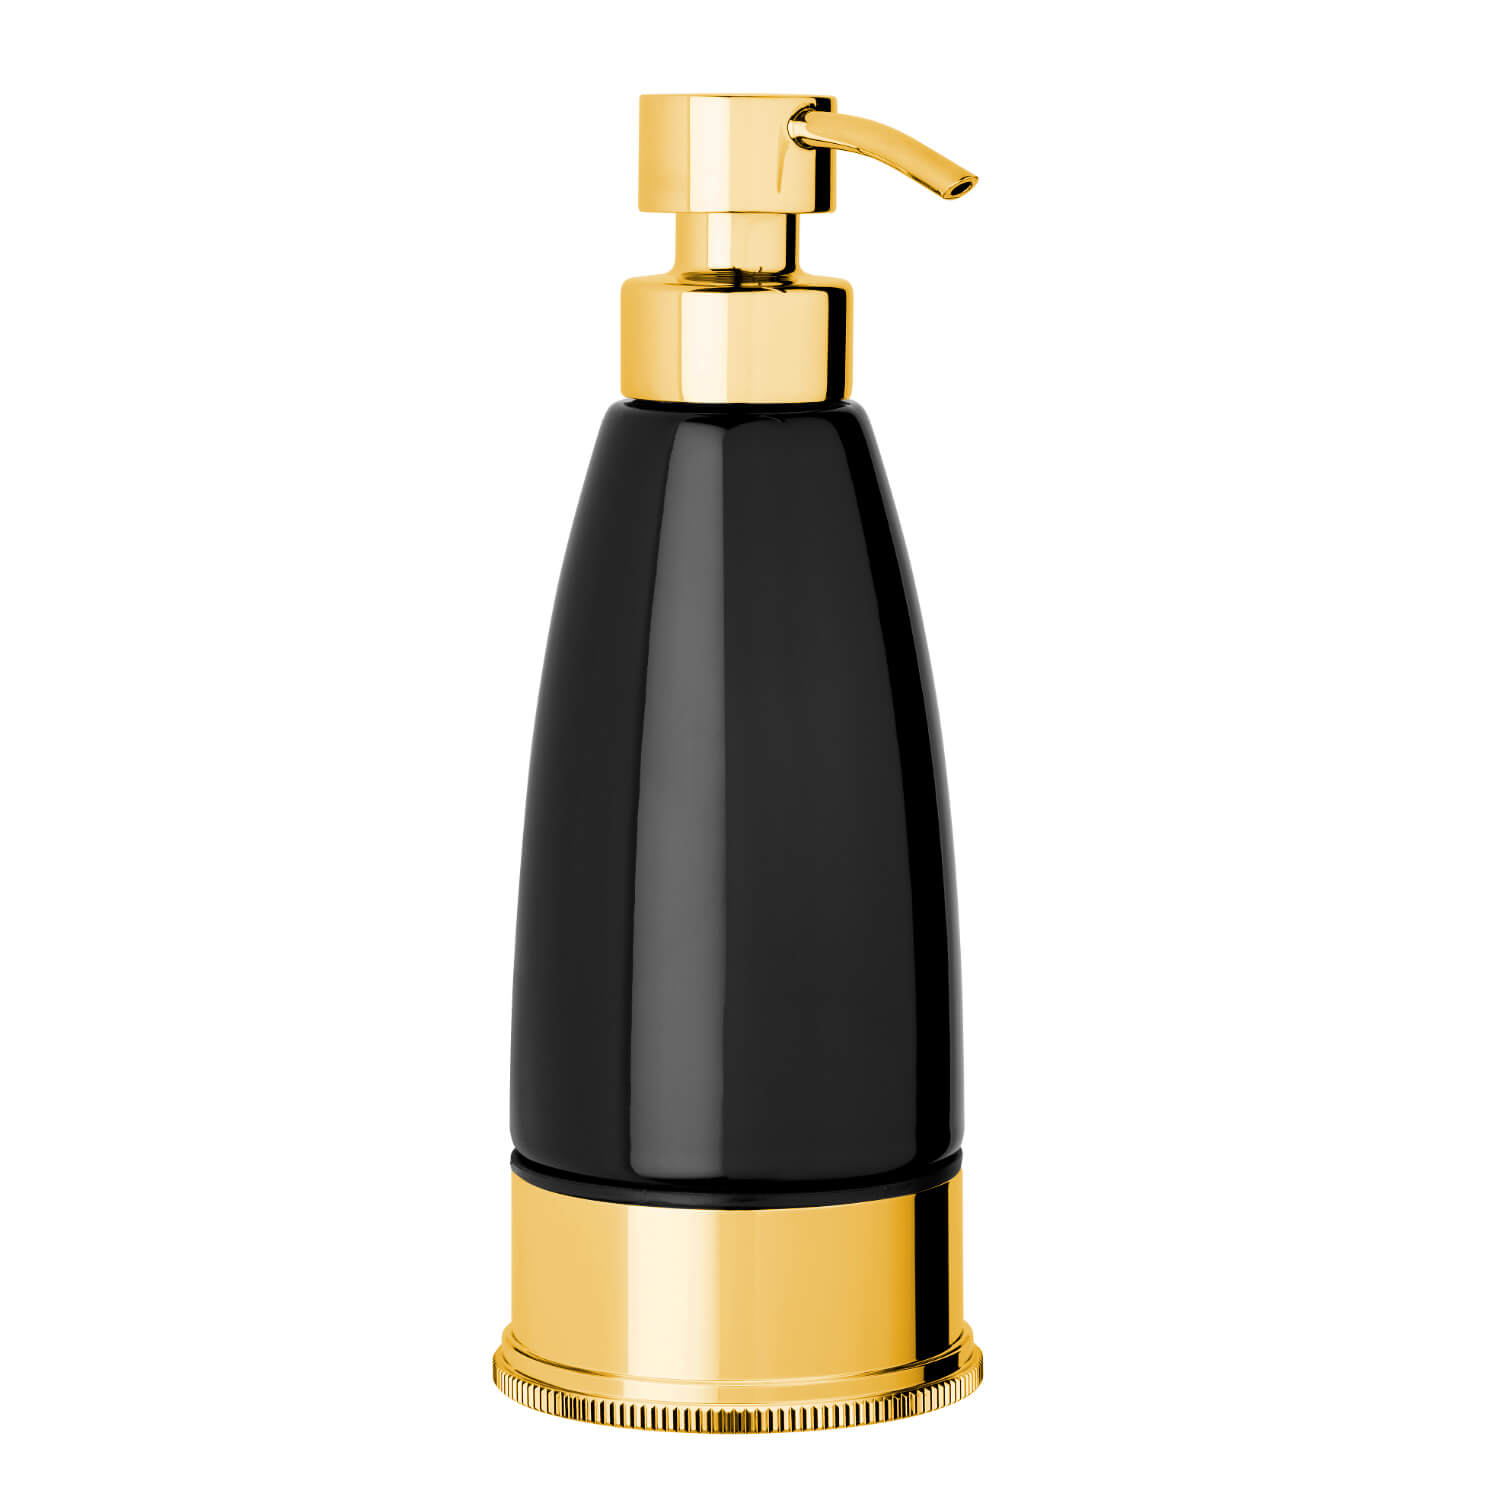 Soap dispenser - Black / Antique gold - Free standing - Style